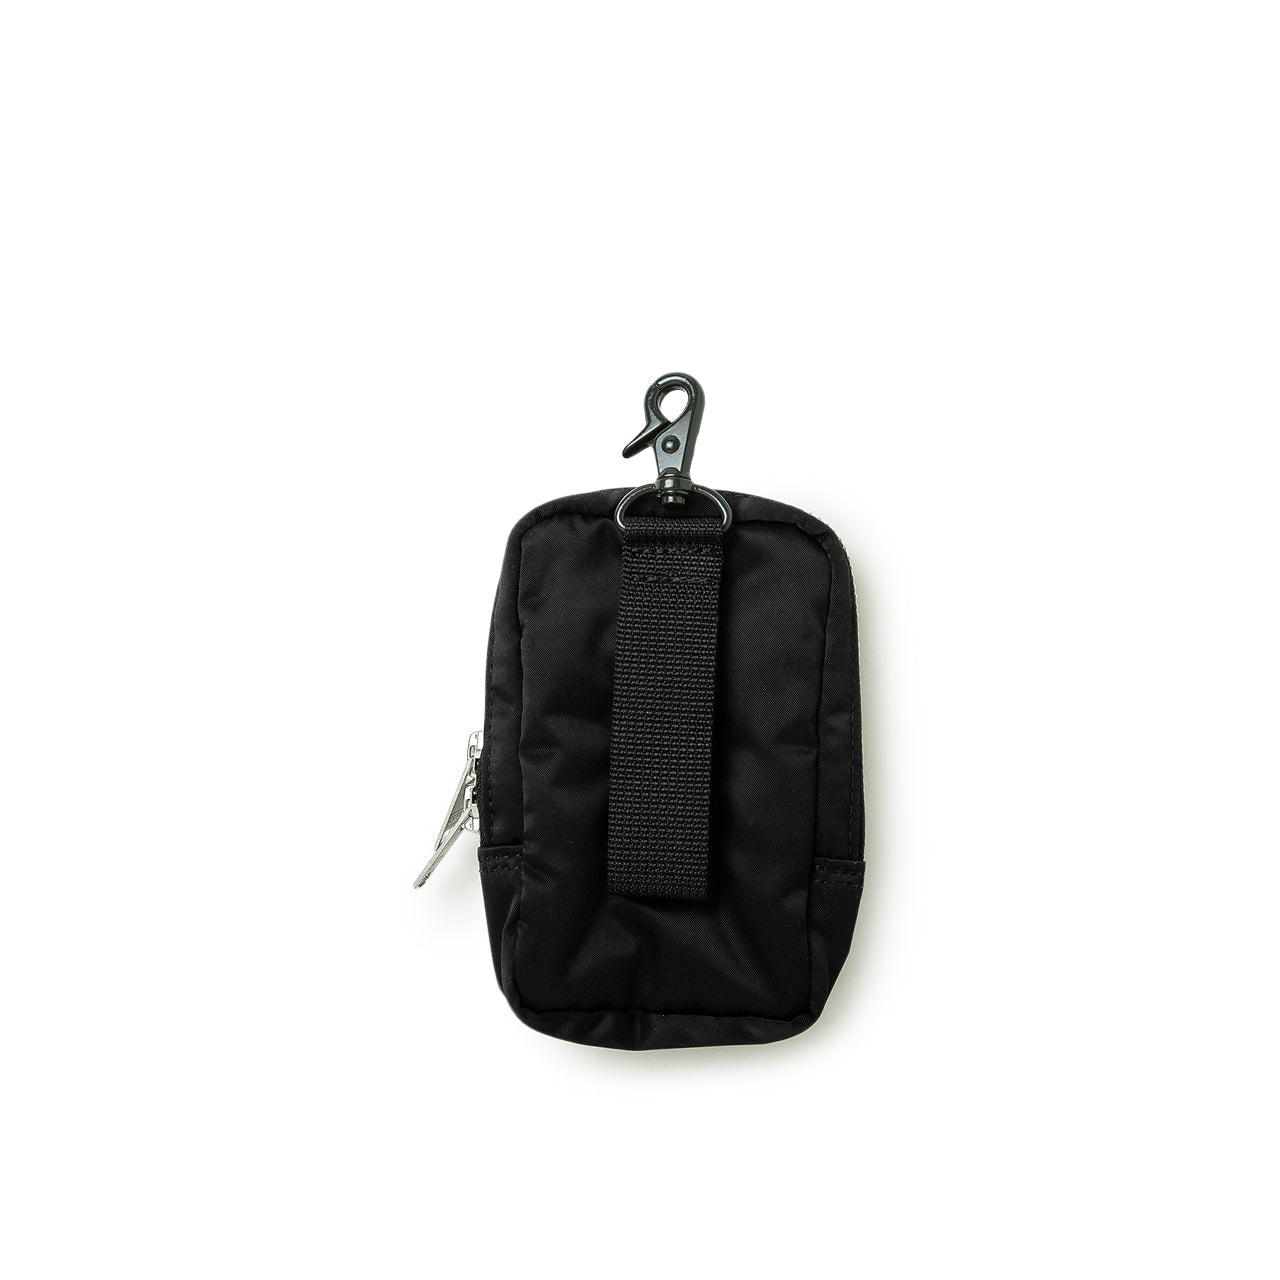 PORTER TANKER POUCH BAG Size:S Color:BLACK TANKER Condition:9/10 Price:RM500  Made in Japan . #porter #pouchbag #madeinjapan…